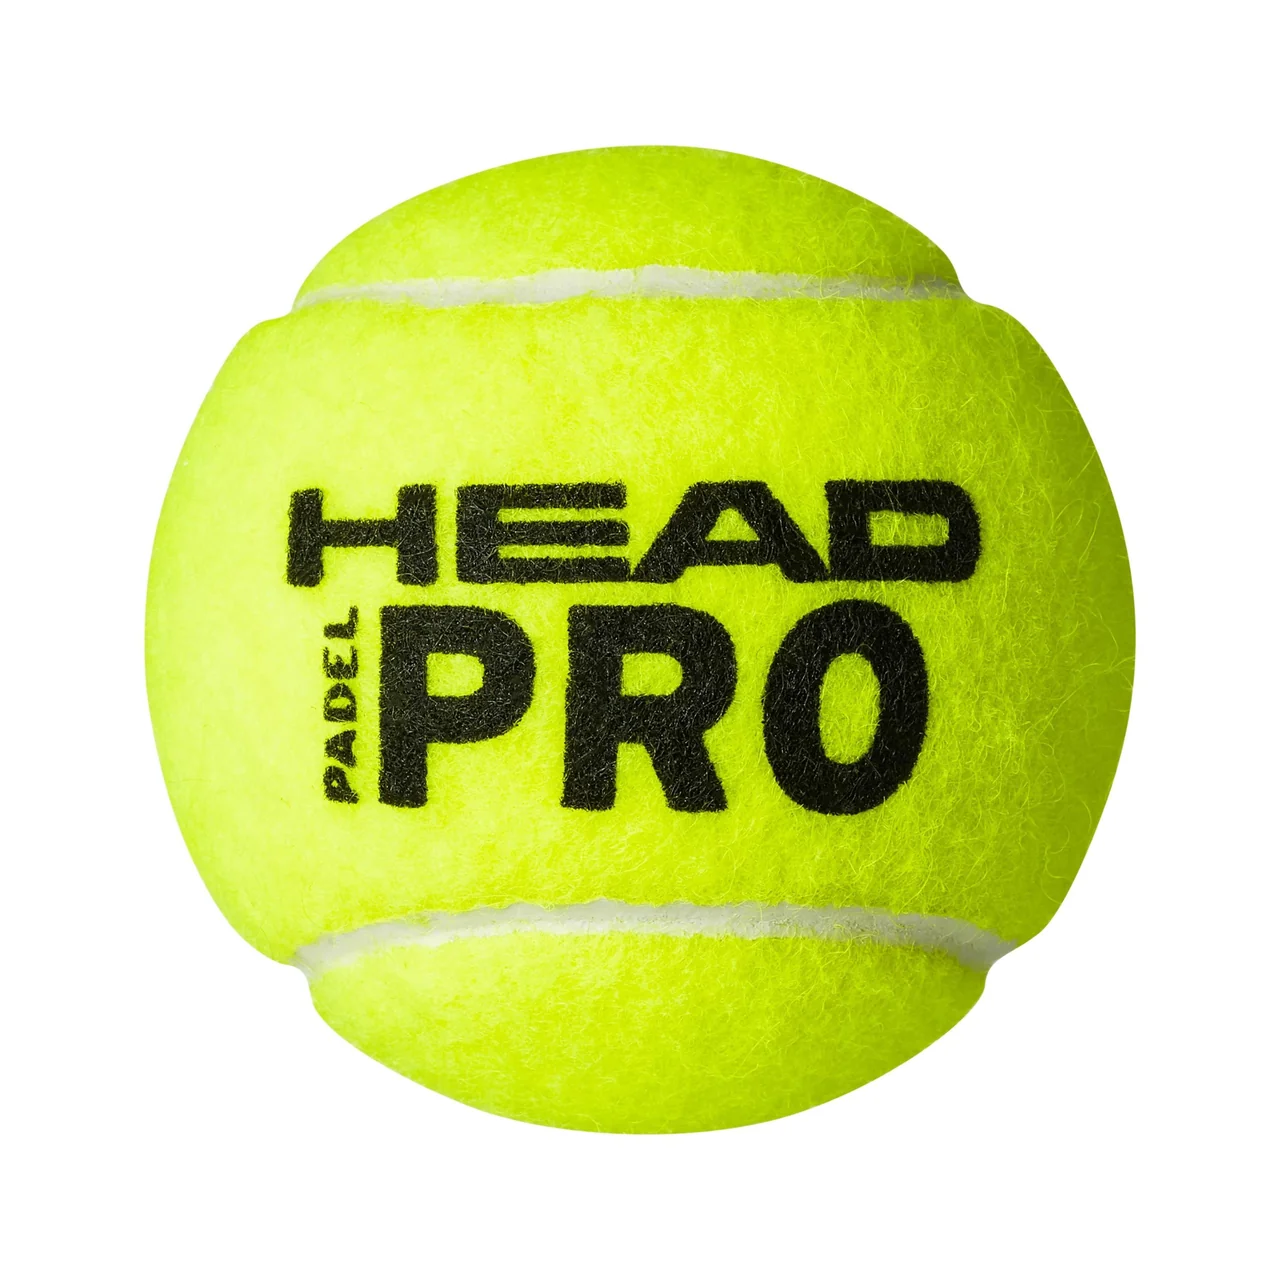 Head Padel Pro Ball 3 tuubia